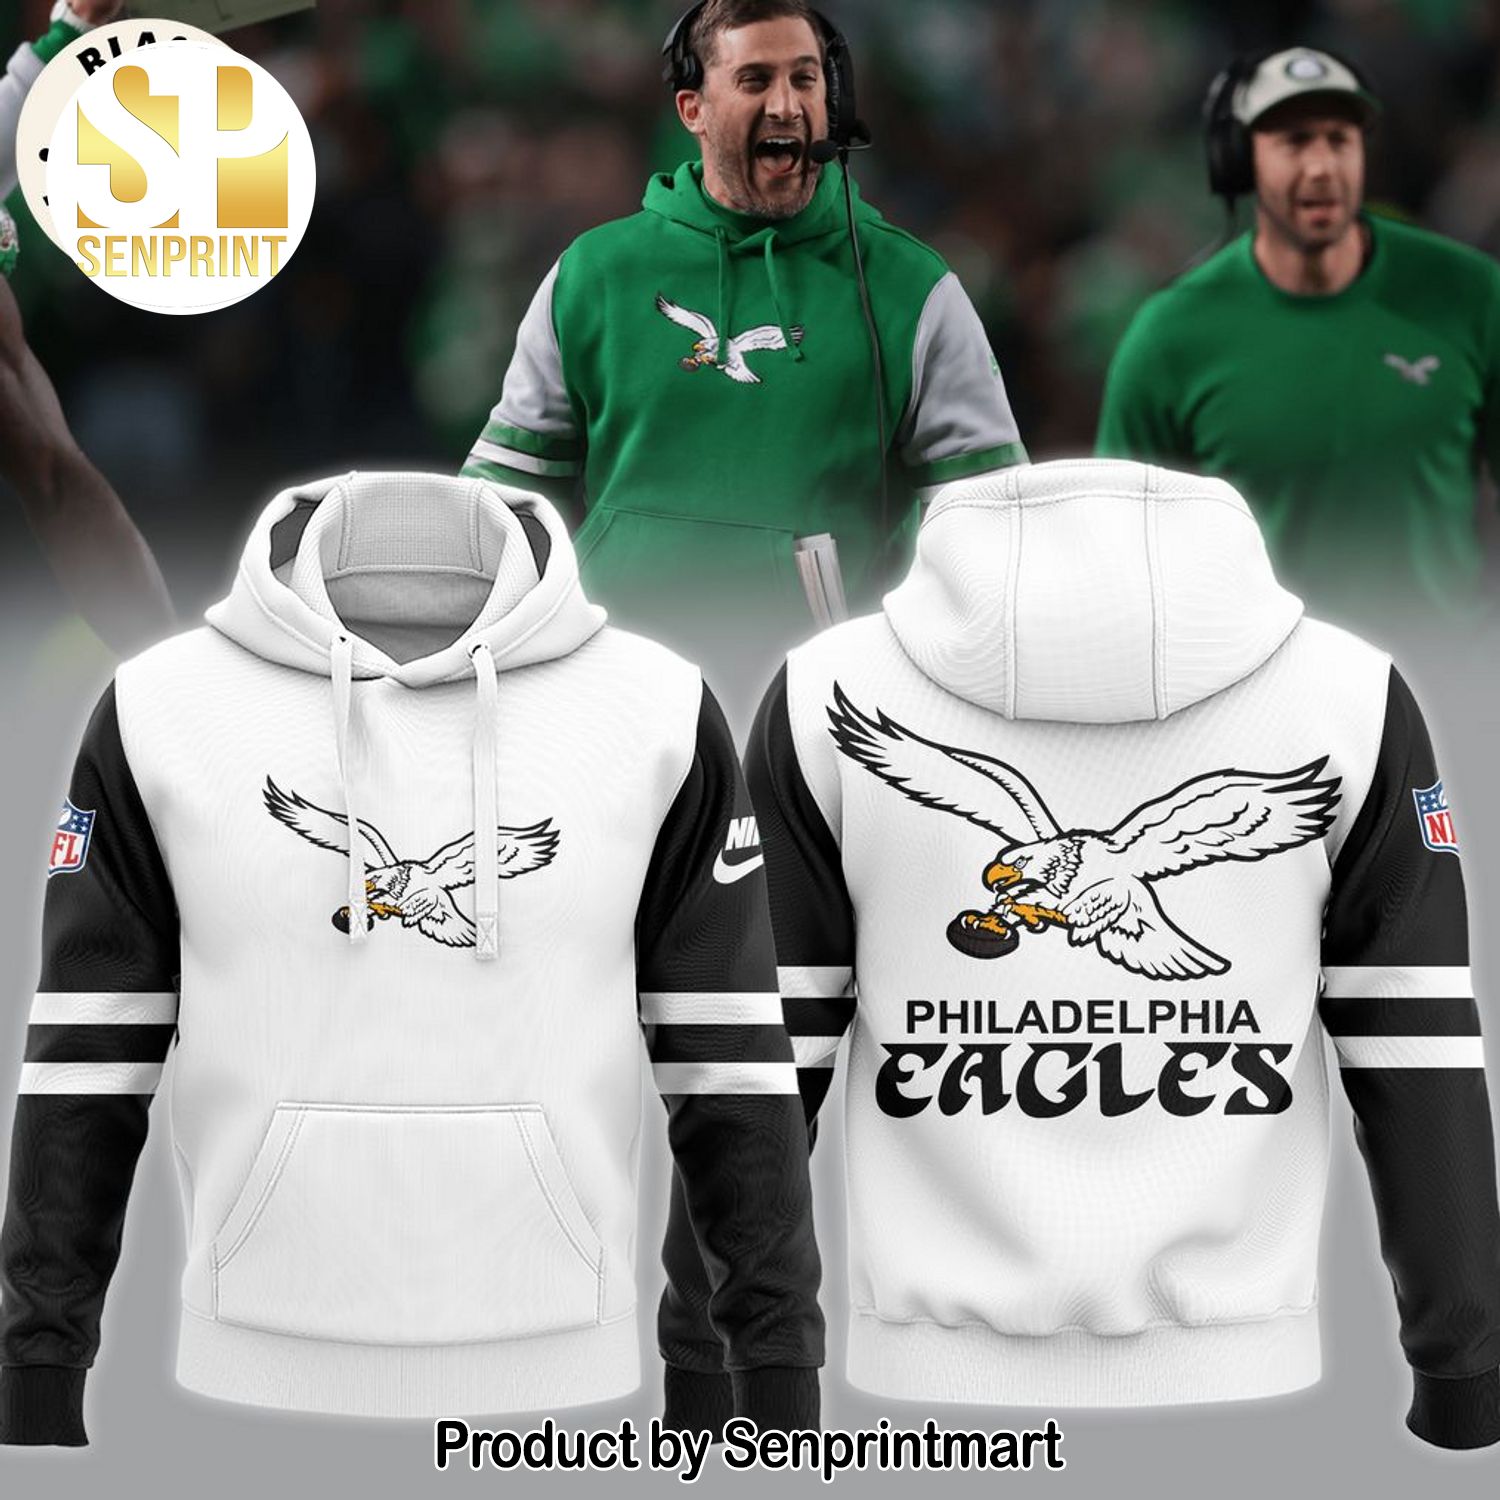 Coach Nicholas John Sirianni’s Philadelphia Eagles NFL Logo Black White Design Full Printing Shirt